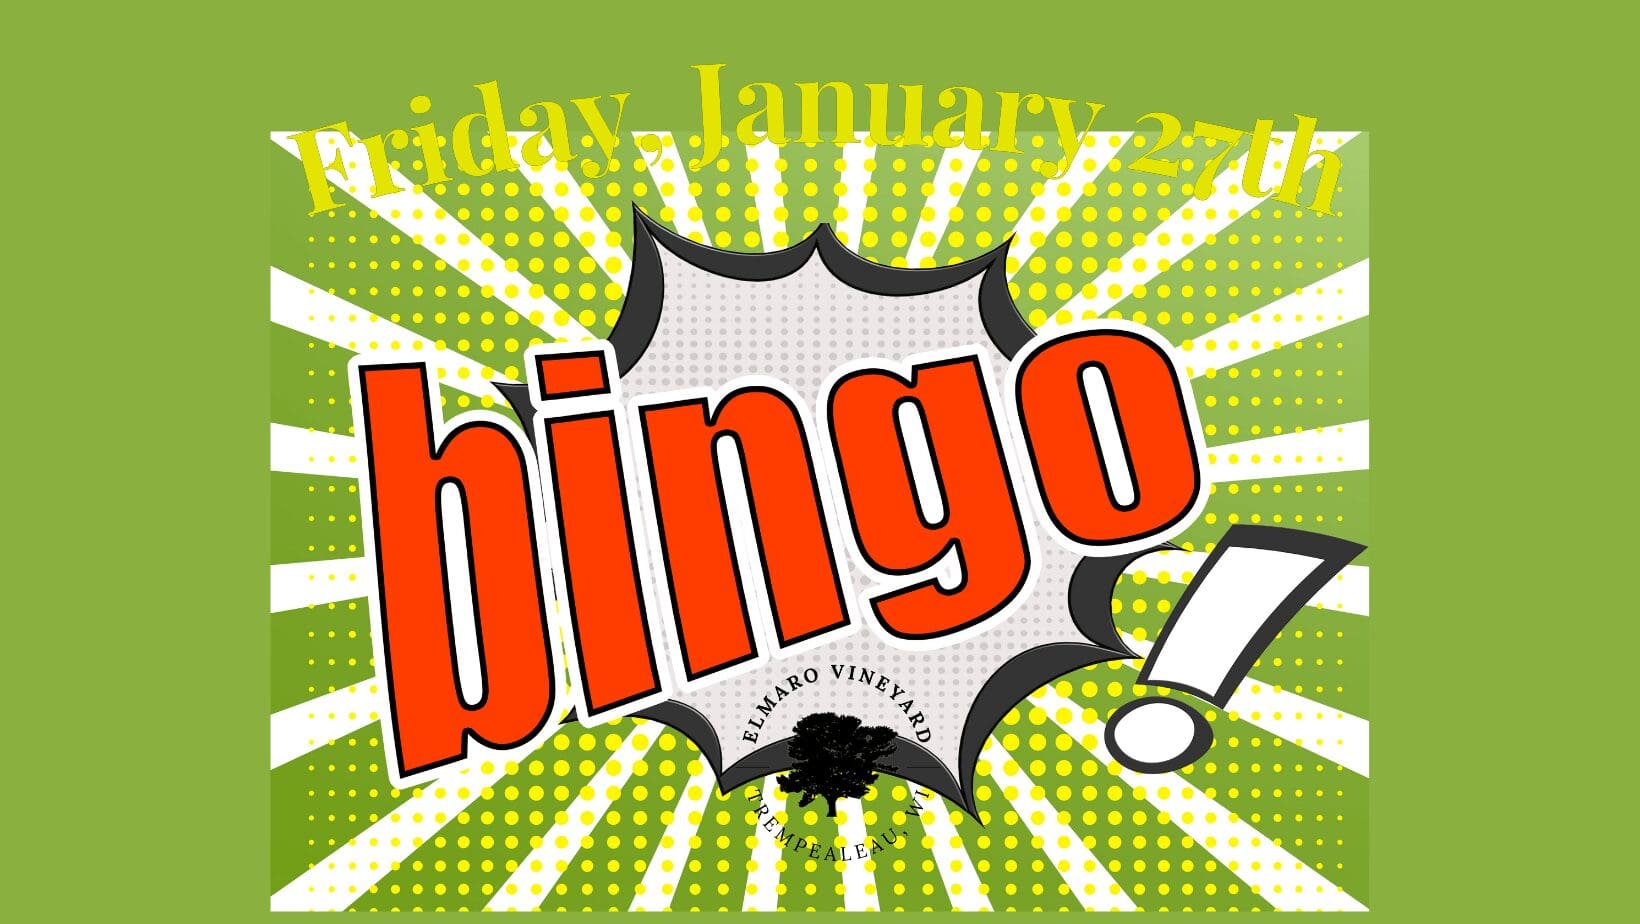 Bingo on friday january 21st.